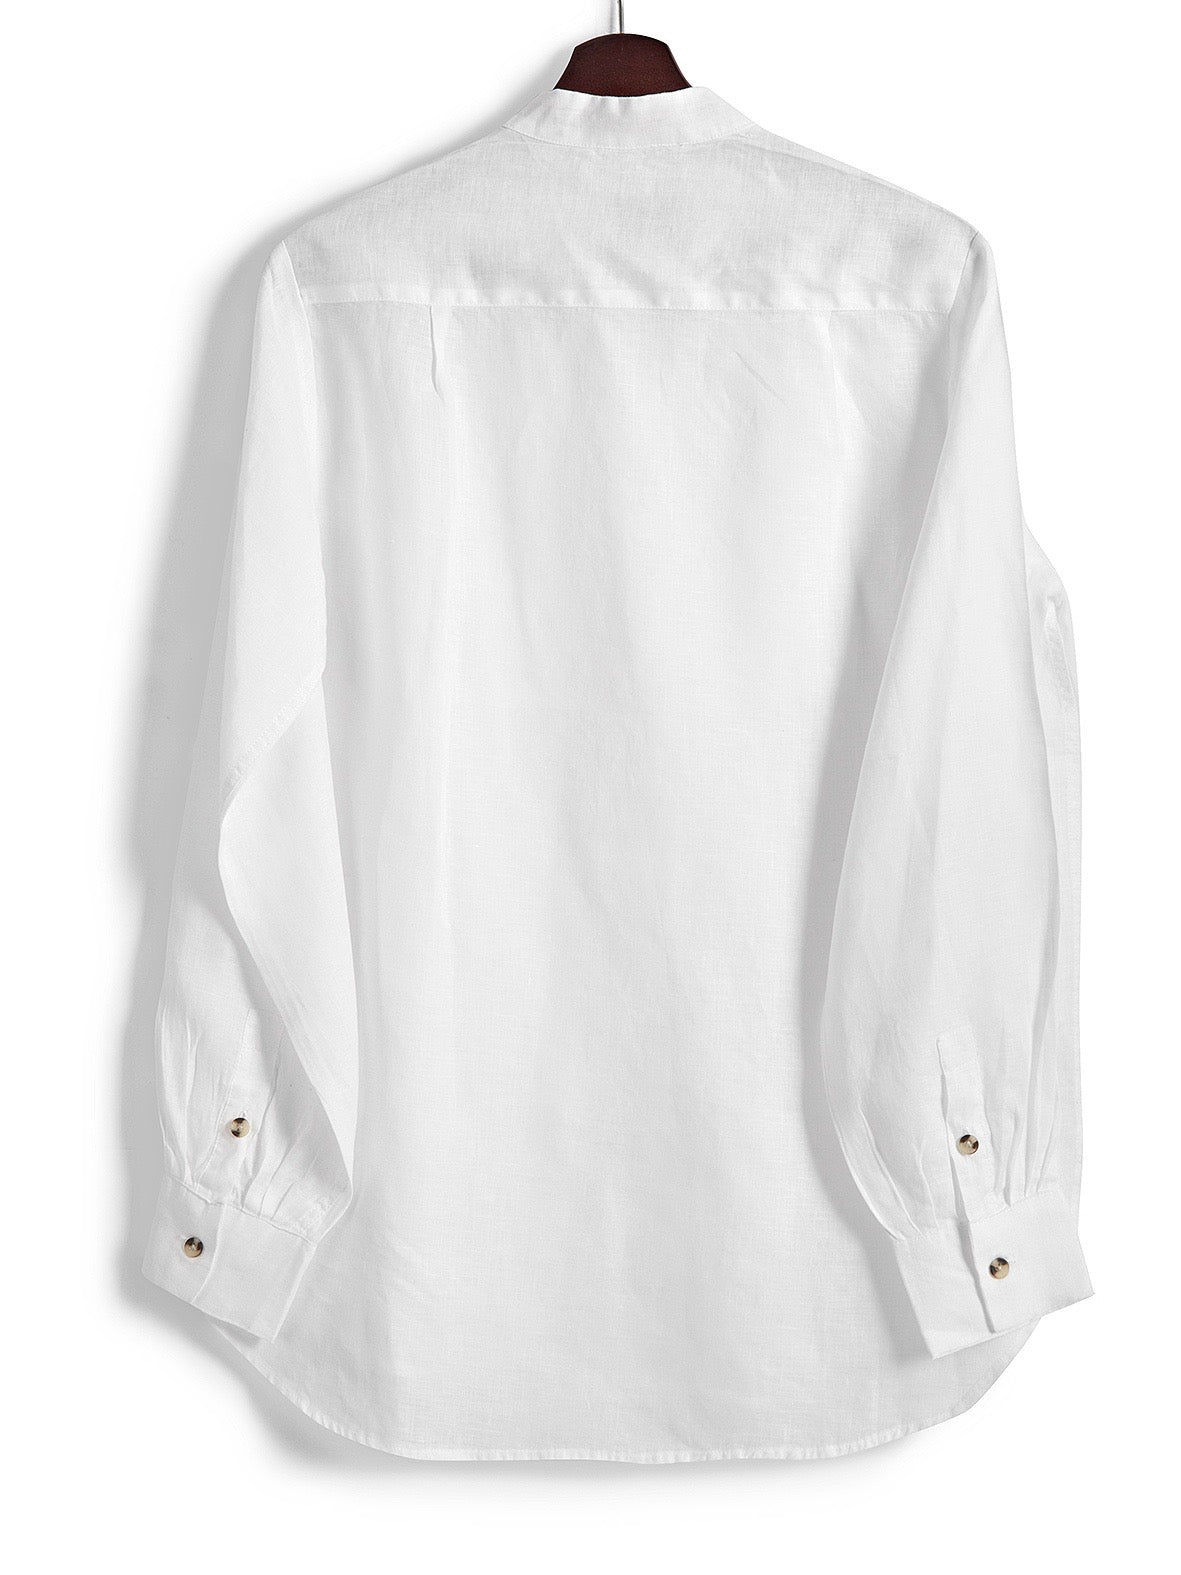 Bib Shirt in White Linen, Shirt, Hickman & Bousfied - Hickman & Bousfield, Safari and Travel Clothing